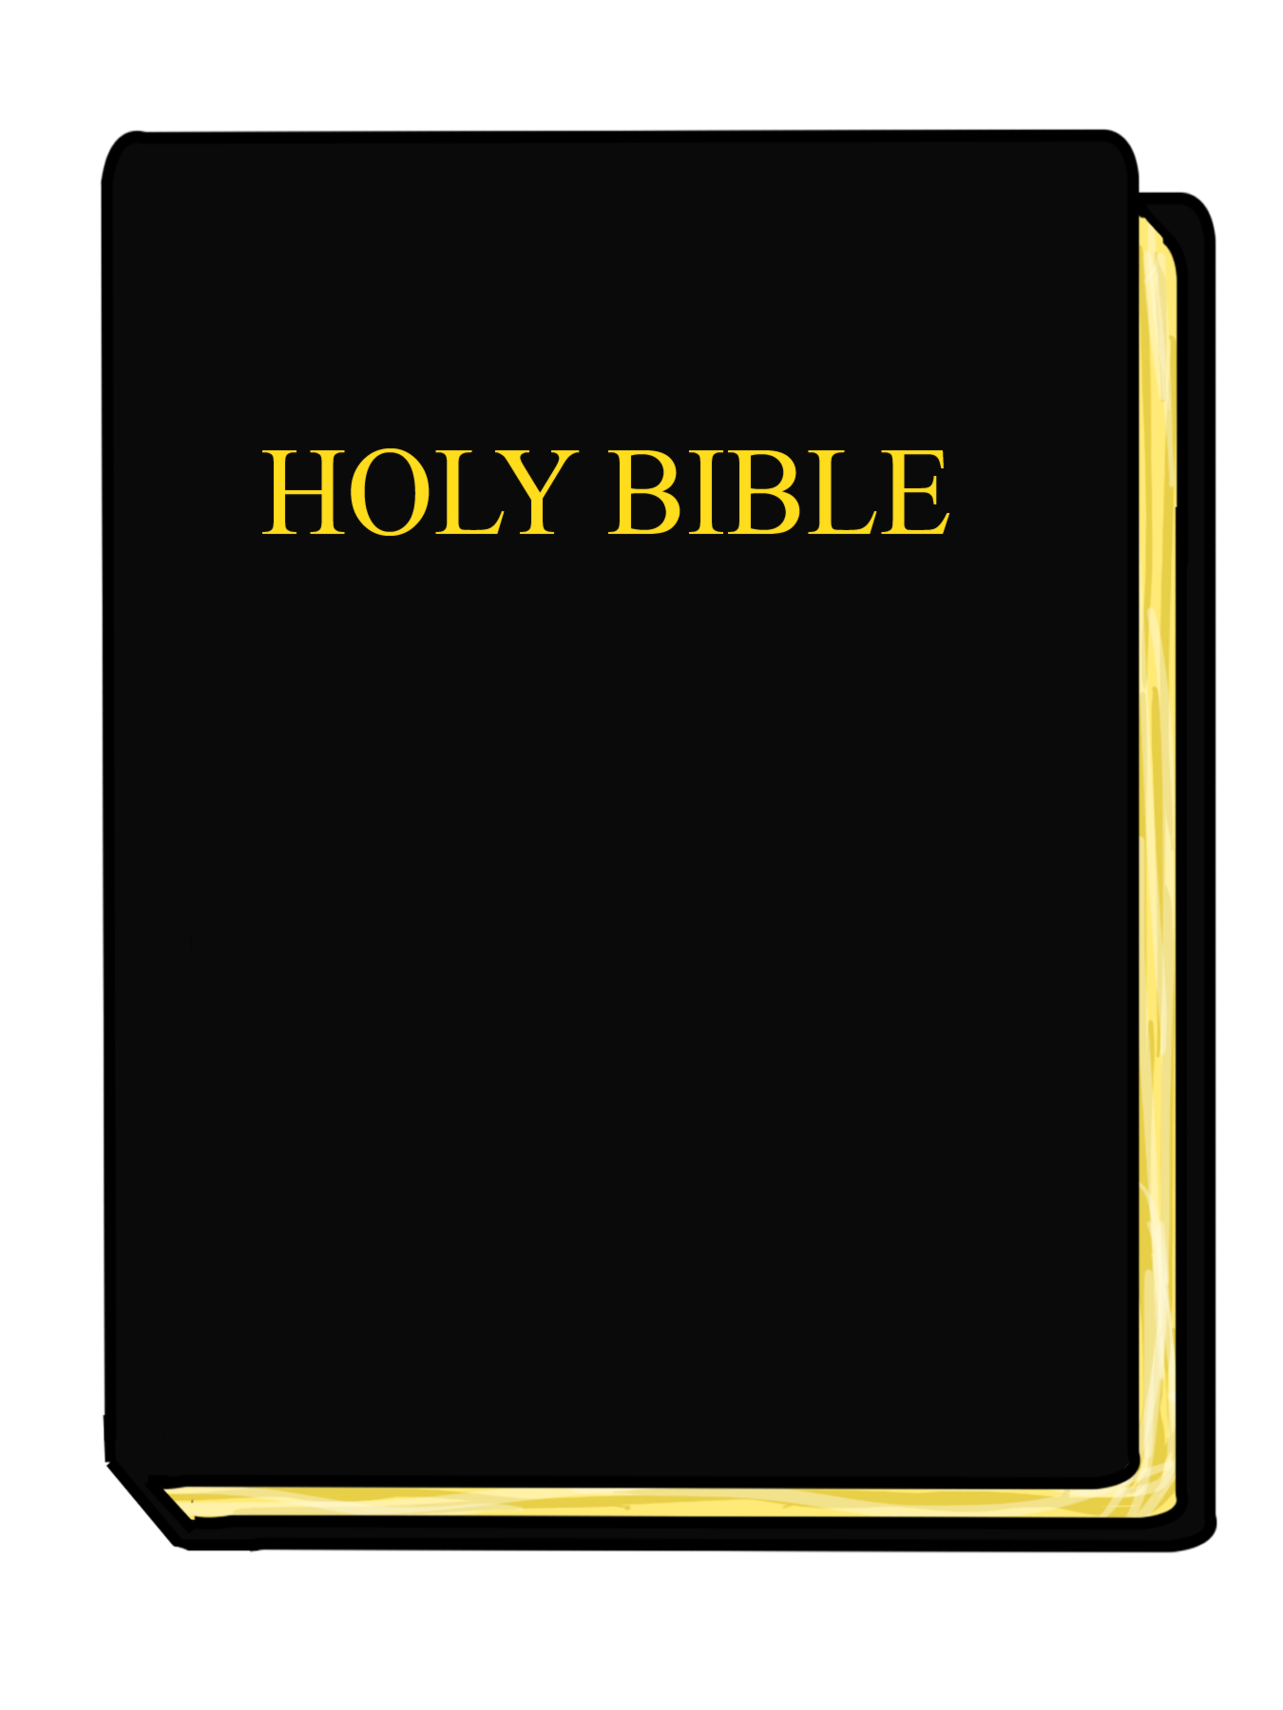 Free Bible Clip Art Image 